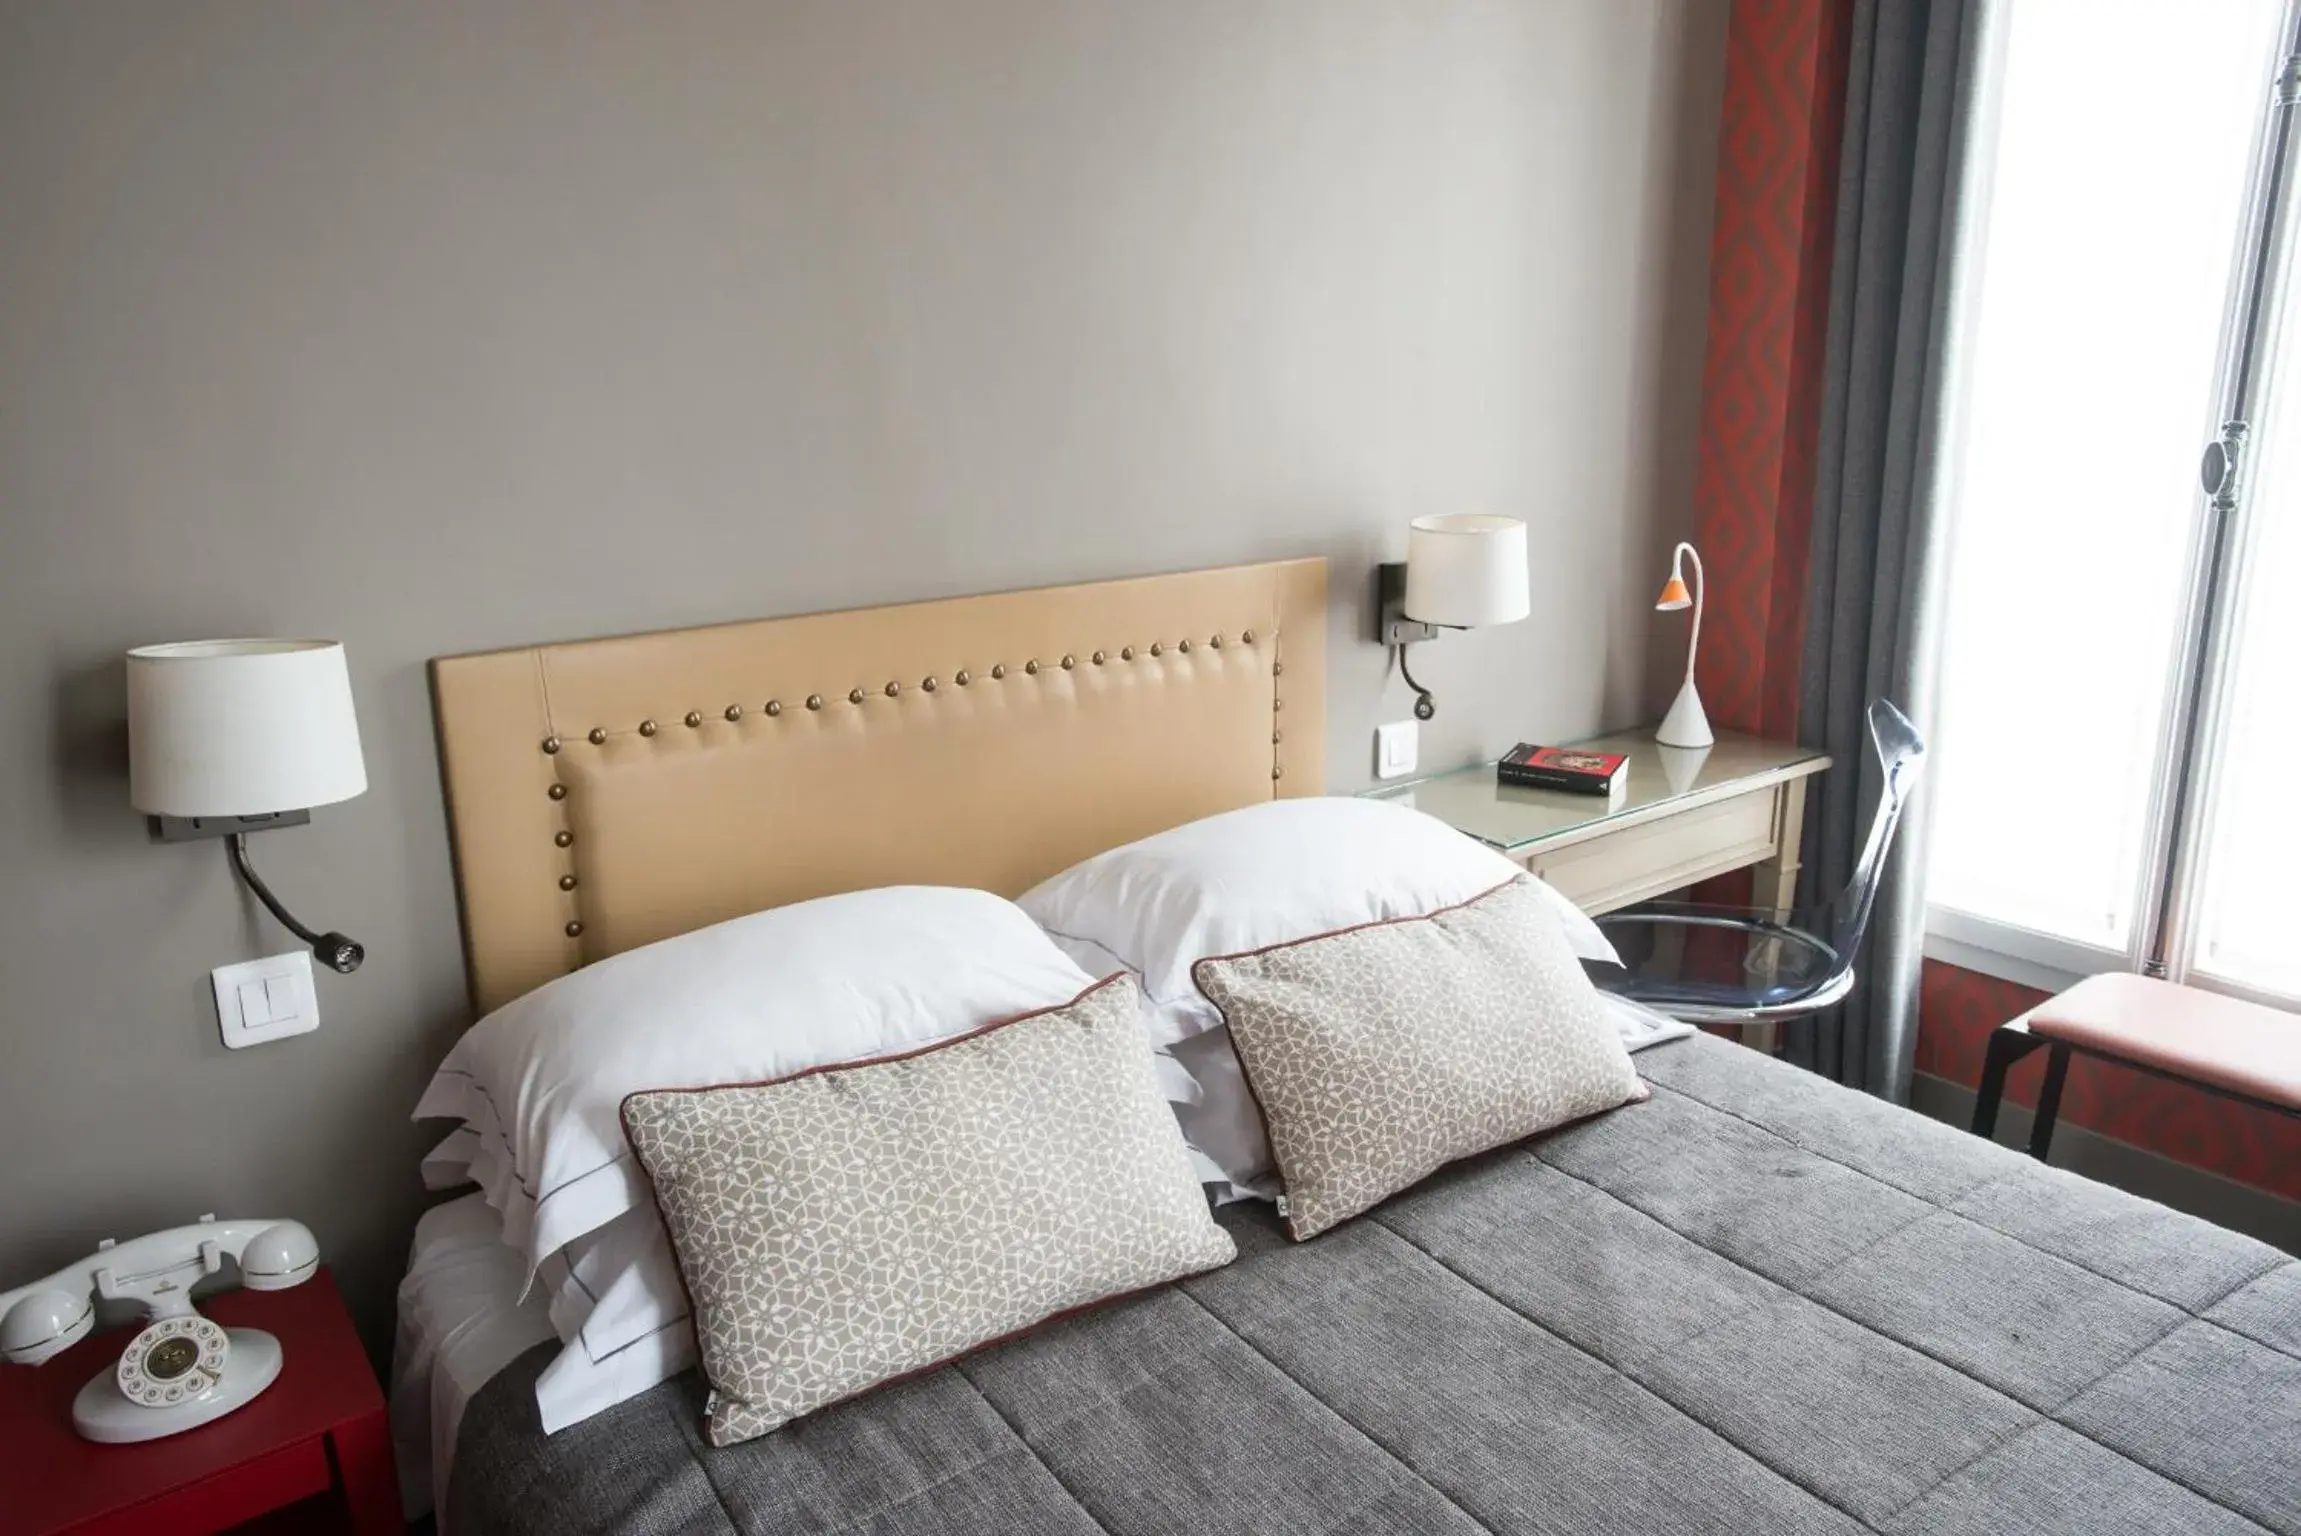 Bed, Room Photo in Apollon Montparnasse